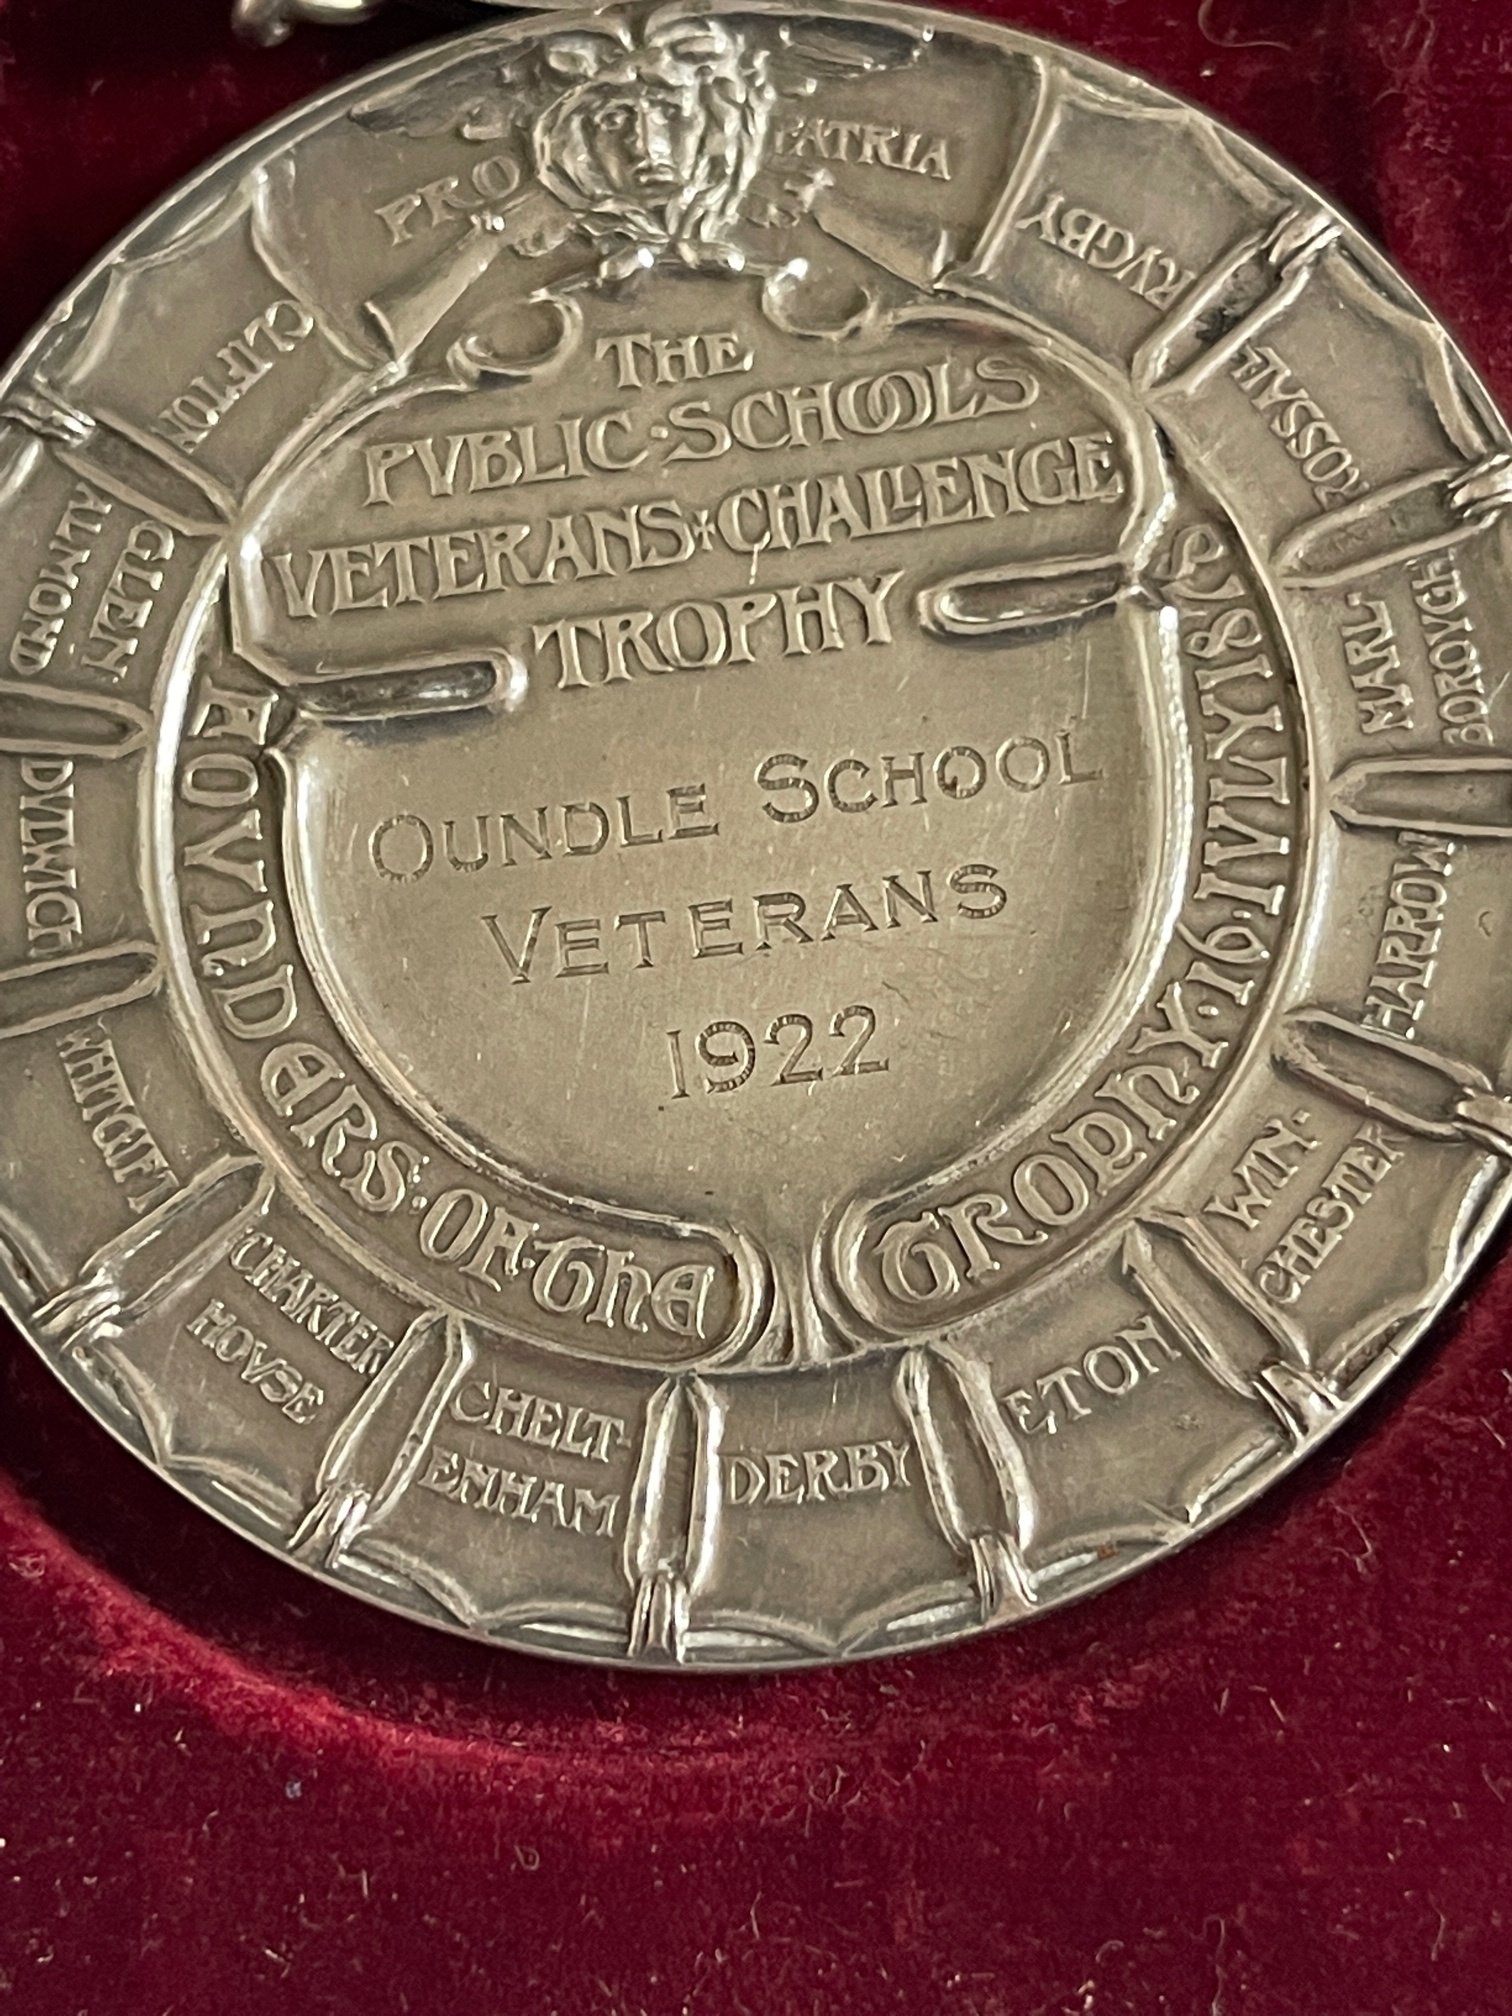 Antique Boxed Silver Public Schools Veterans Challenge Trophy Oundle School Veterans 1922 Medal 60mm - Image 3 of 6